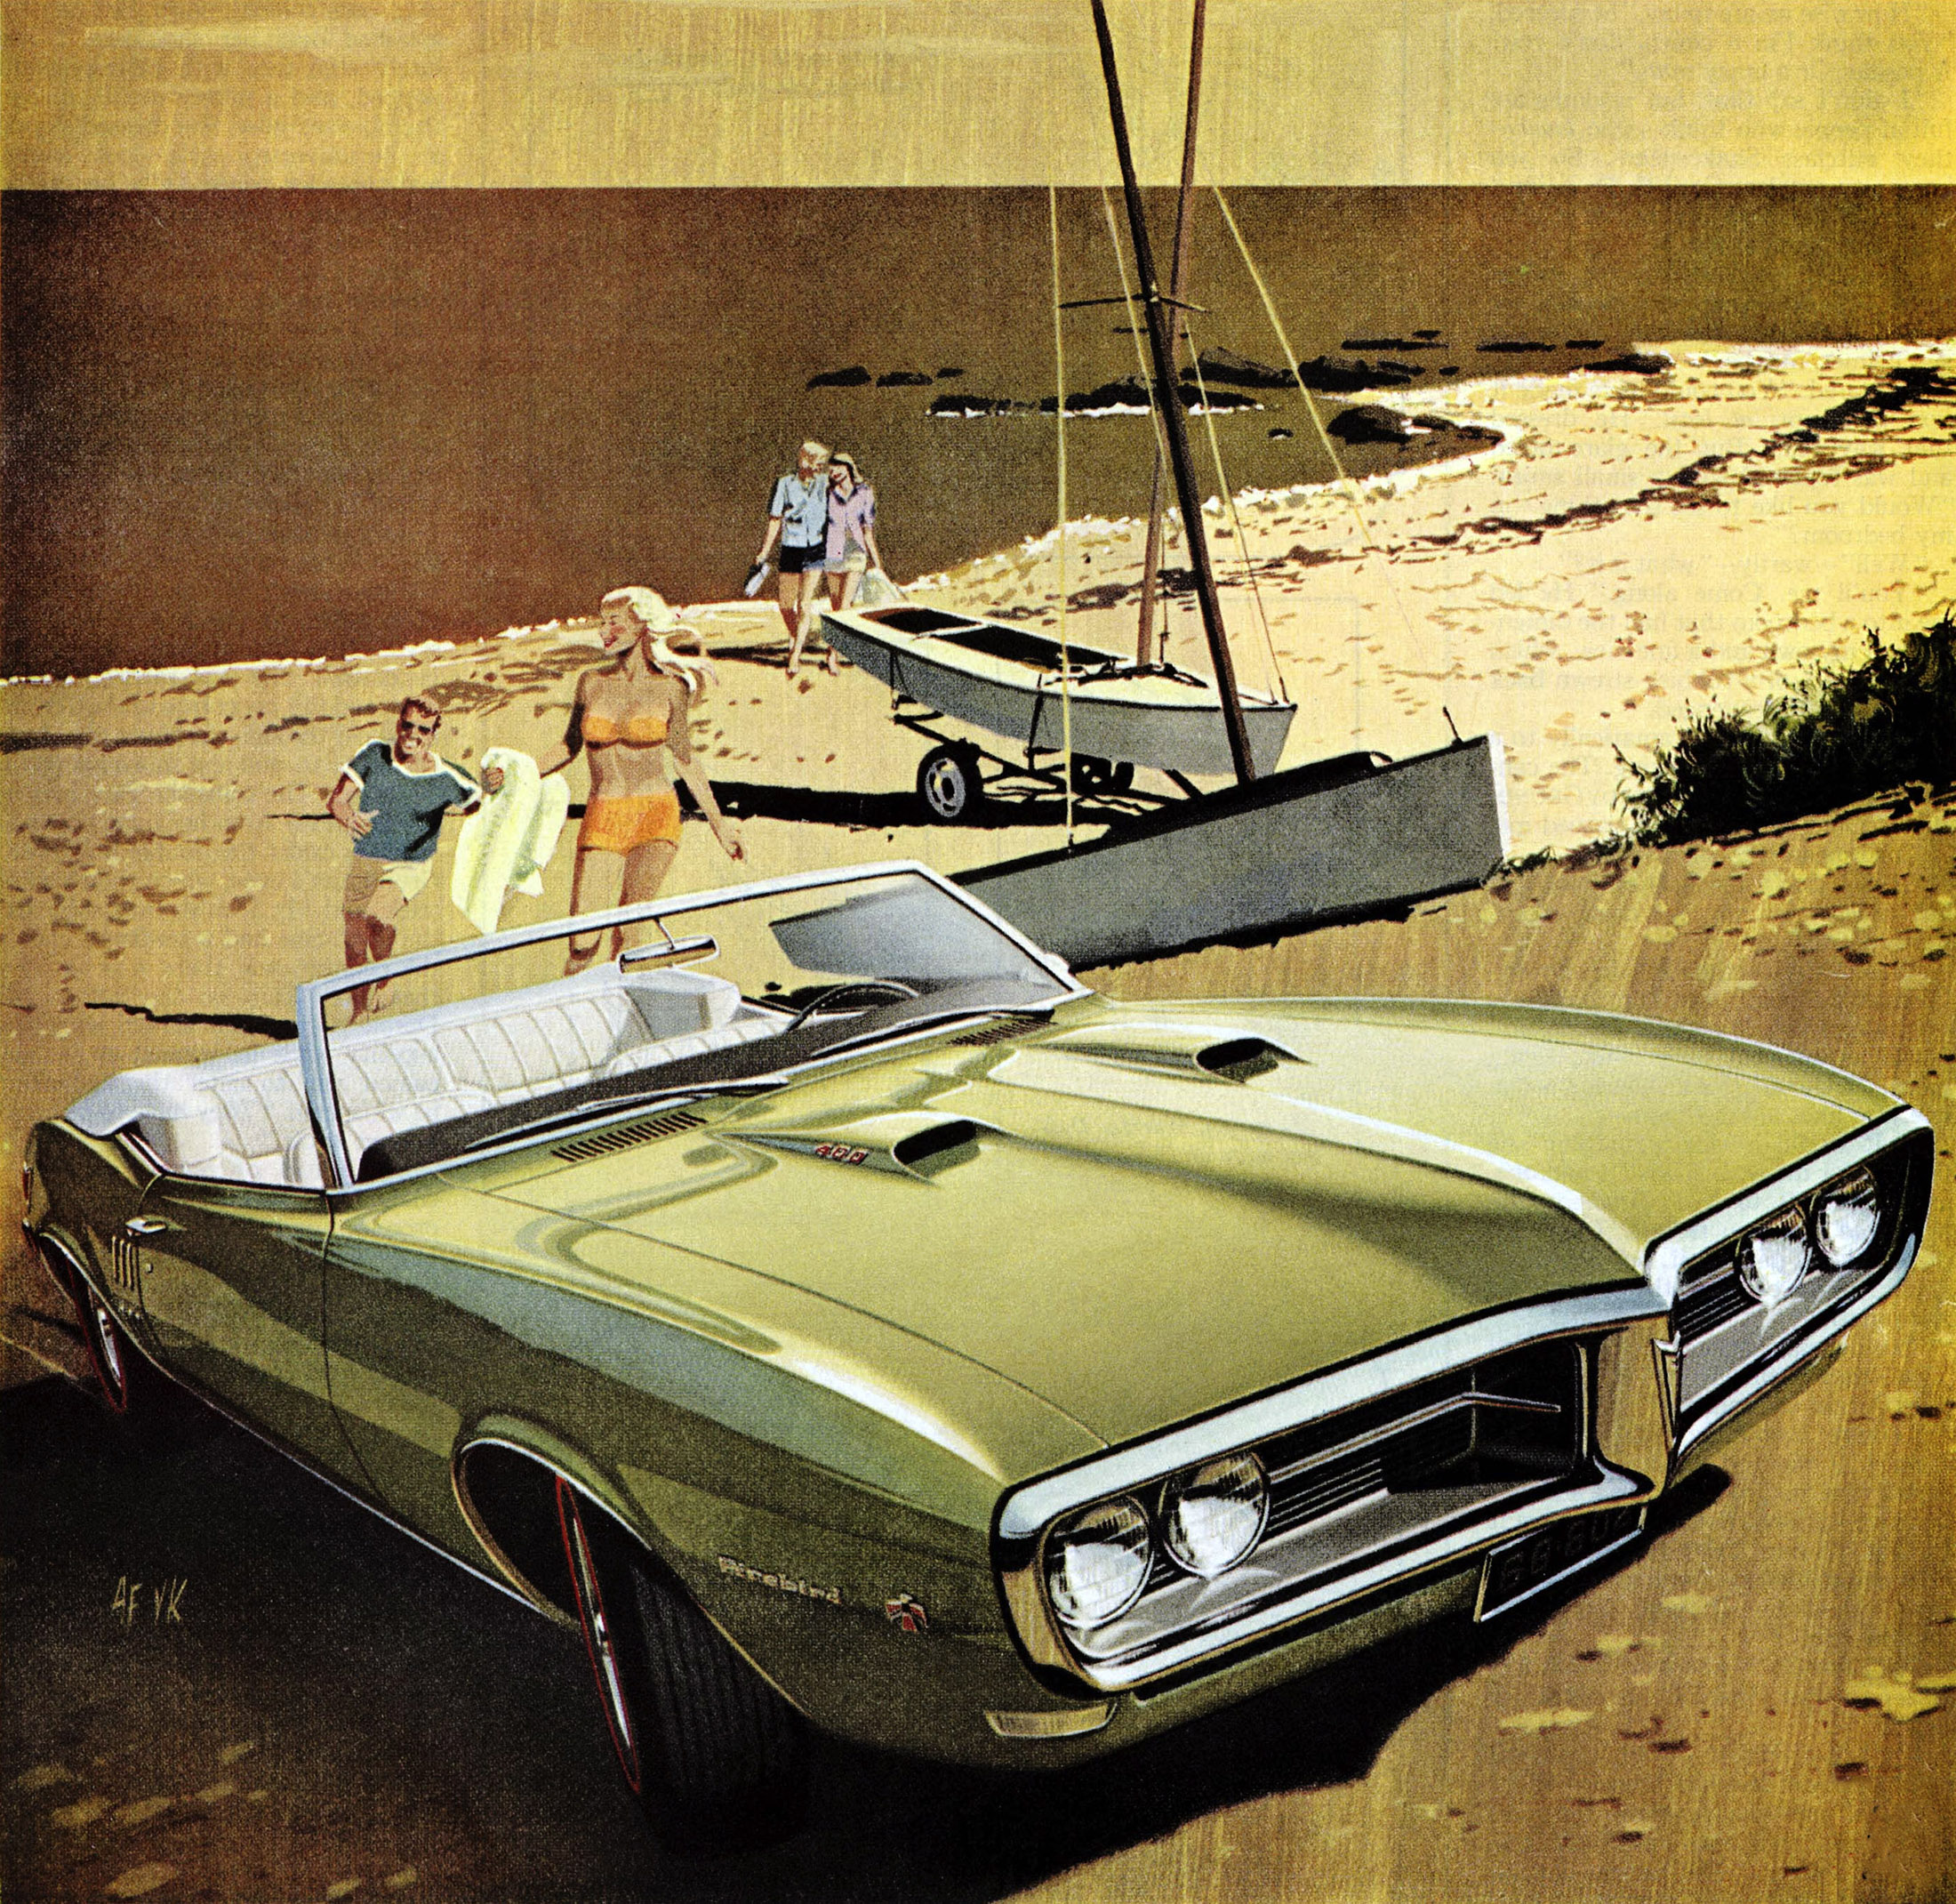 1968 Pontiac Firebird 400 Convertible: Art Fitzpatrick and Van Kaufman